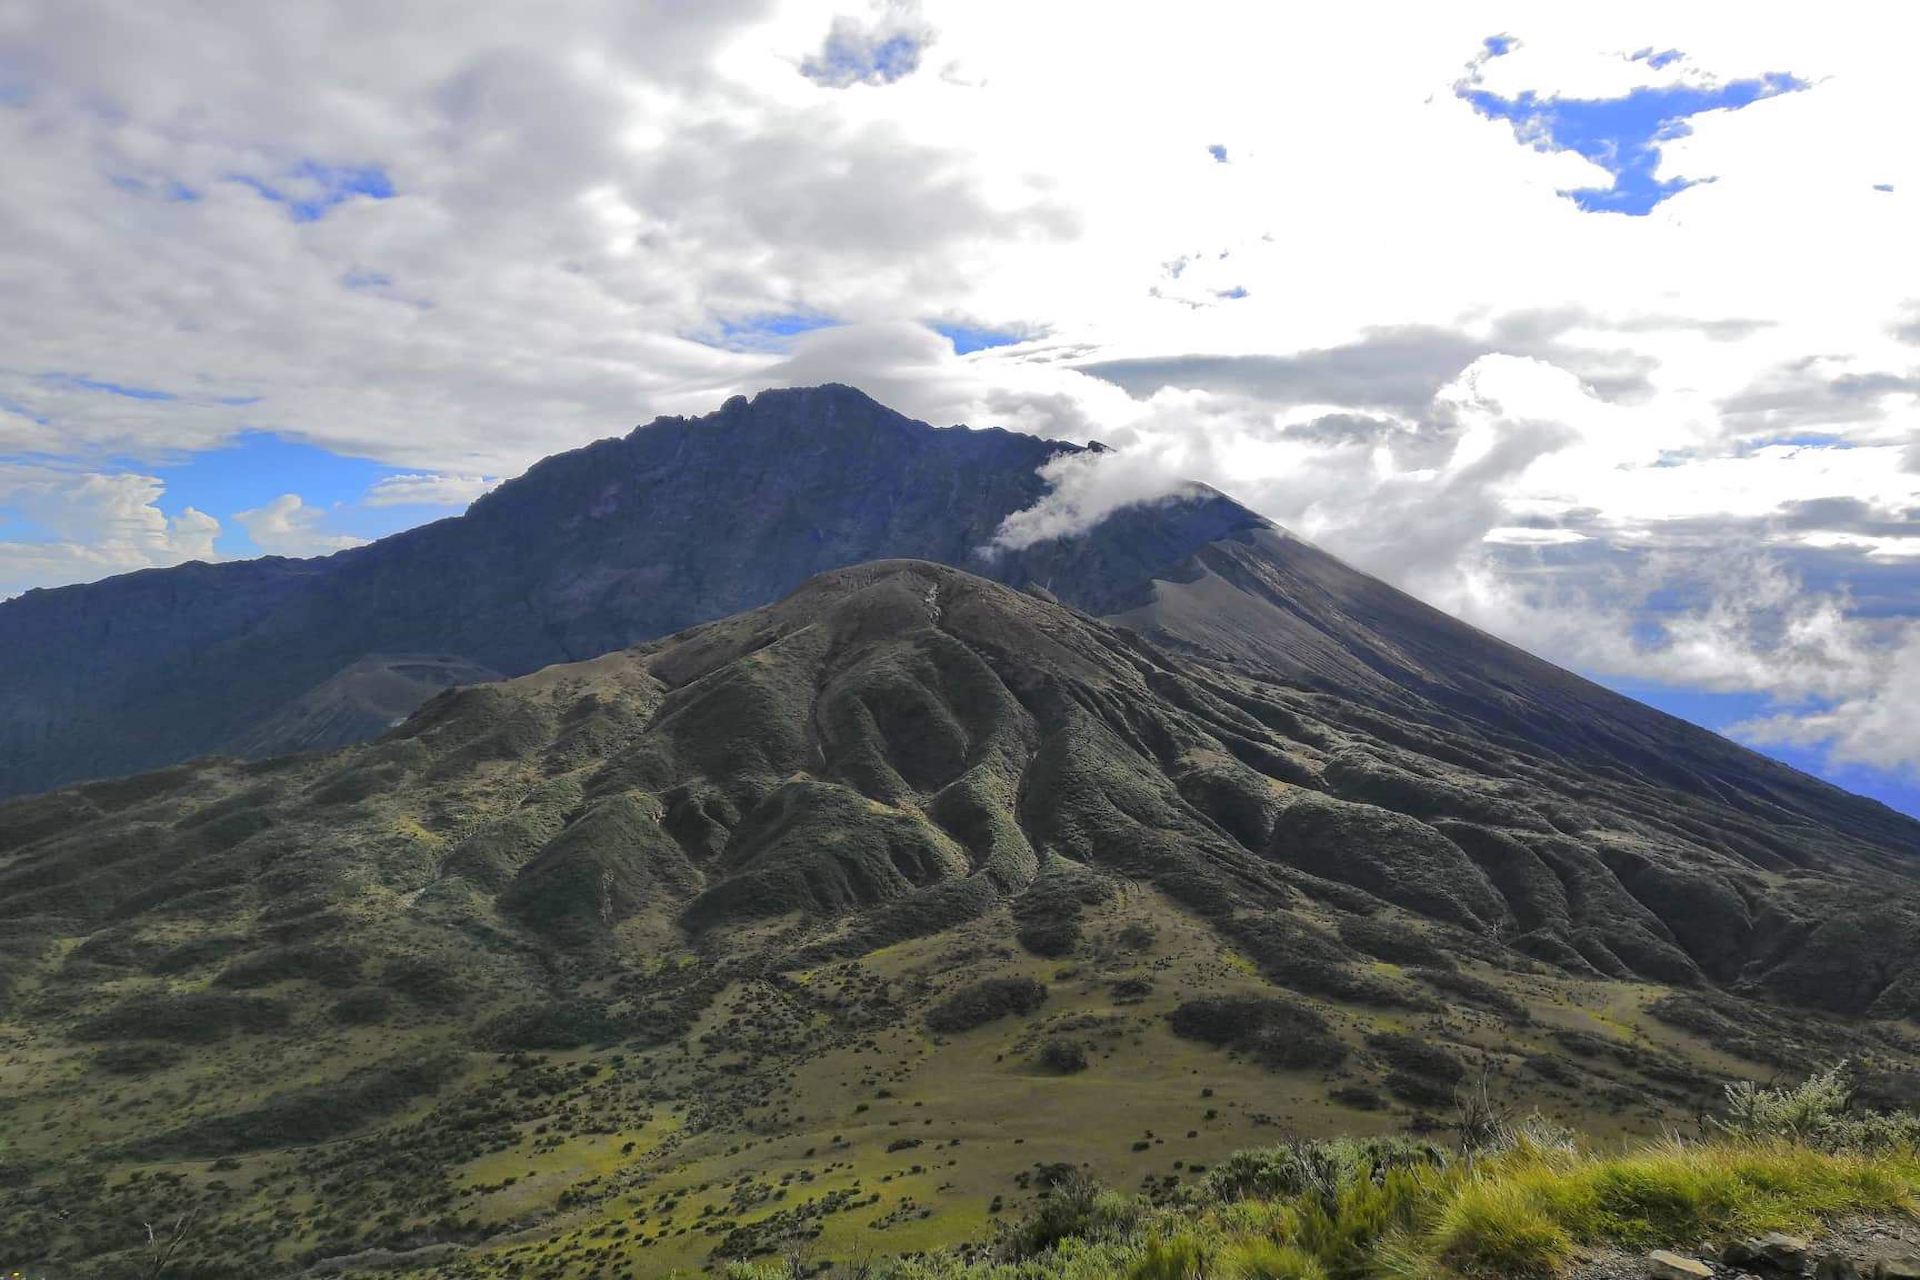 Mount Meru with AWAT